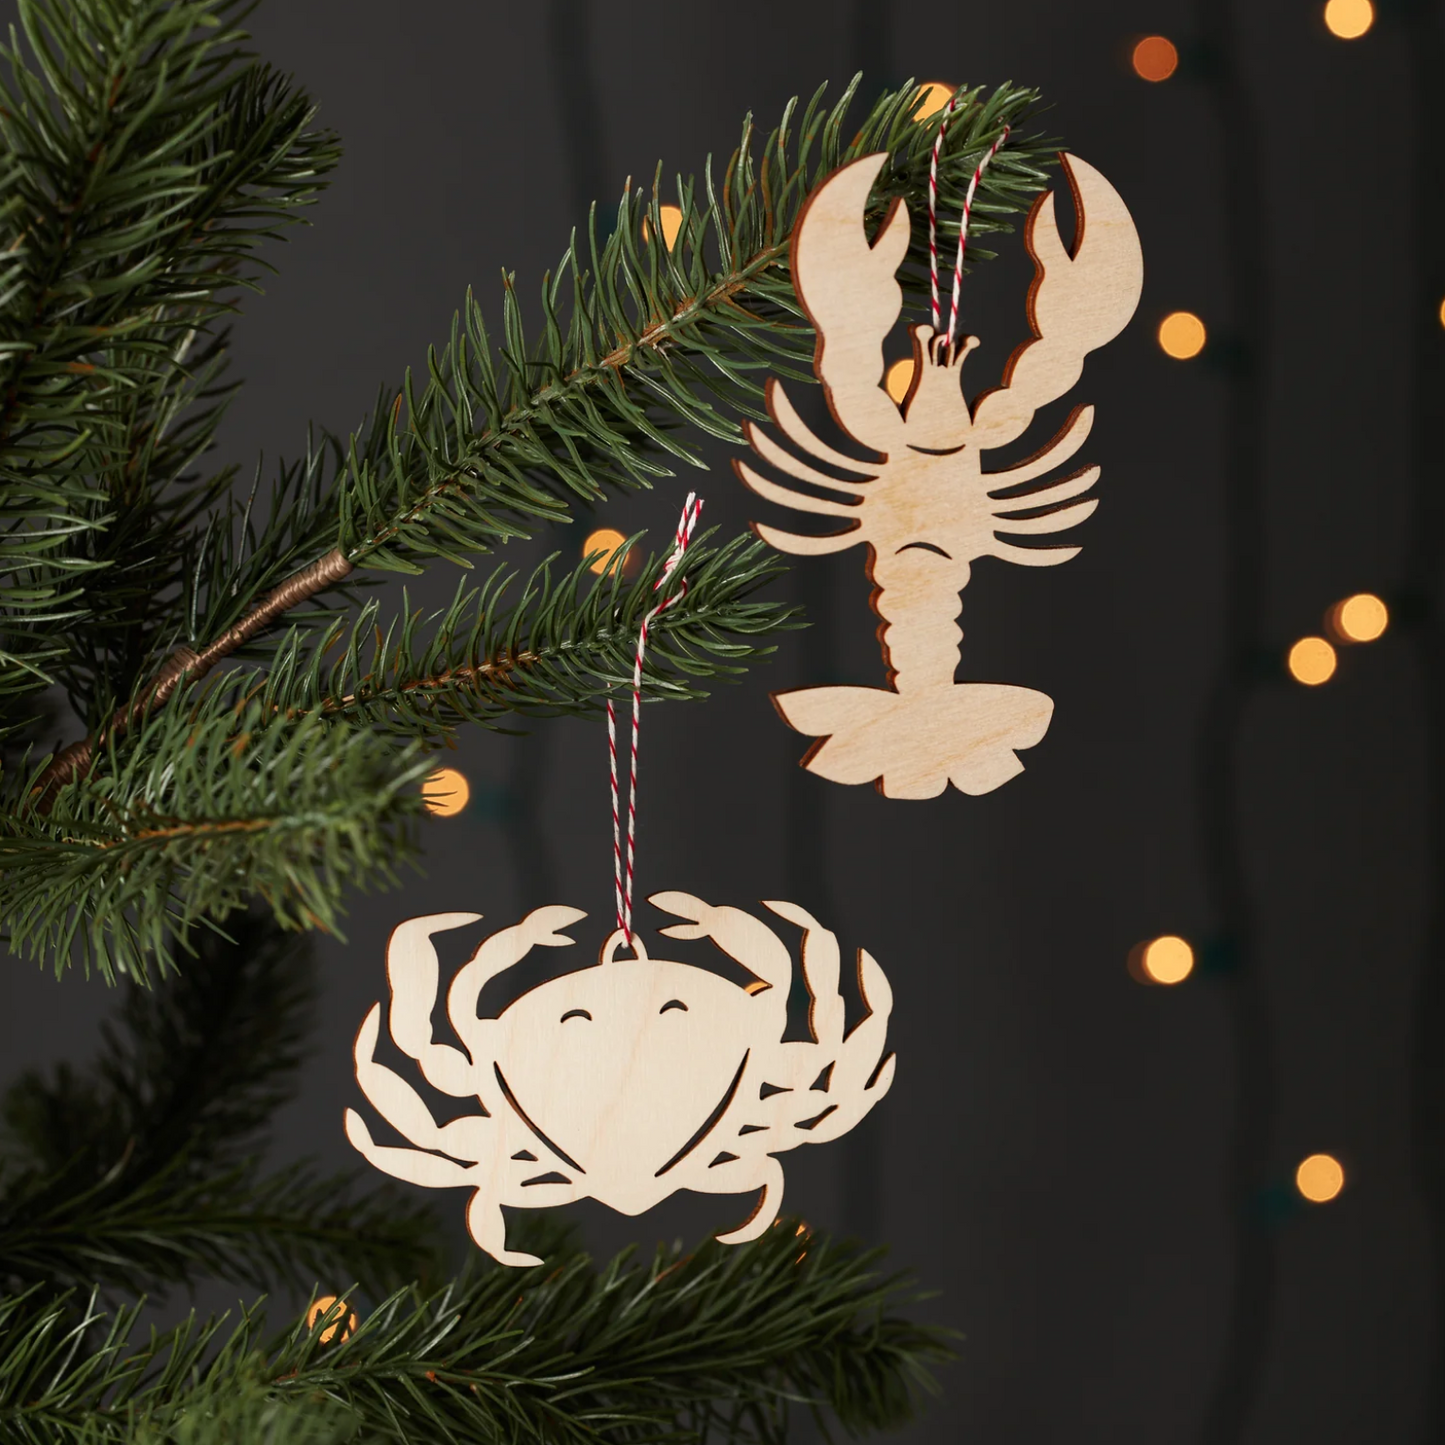 Crab and Lobster Ornament Set